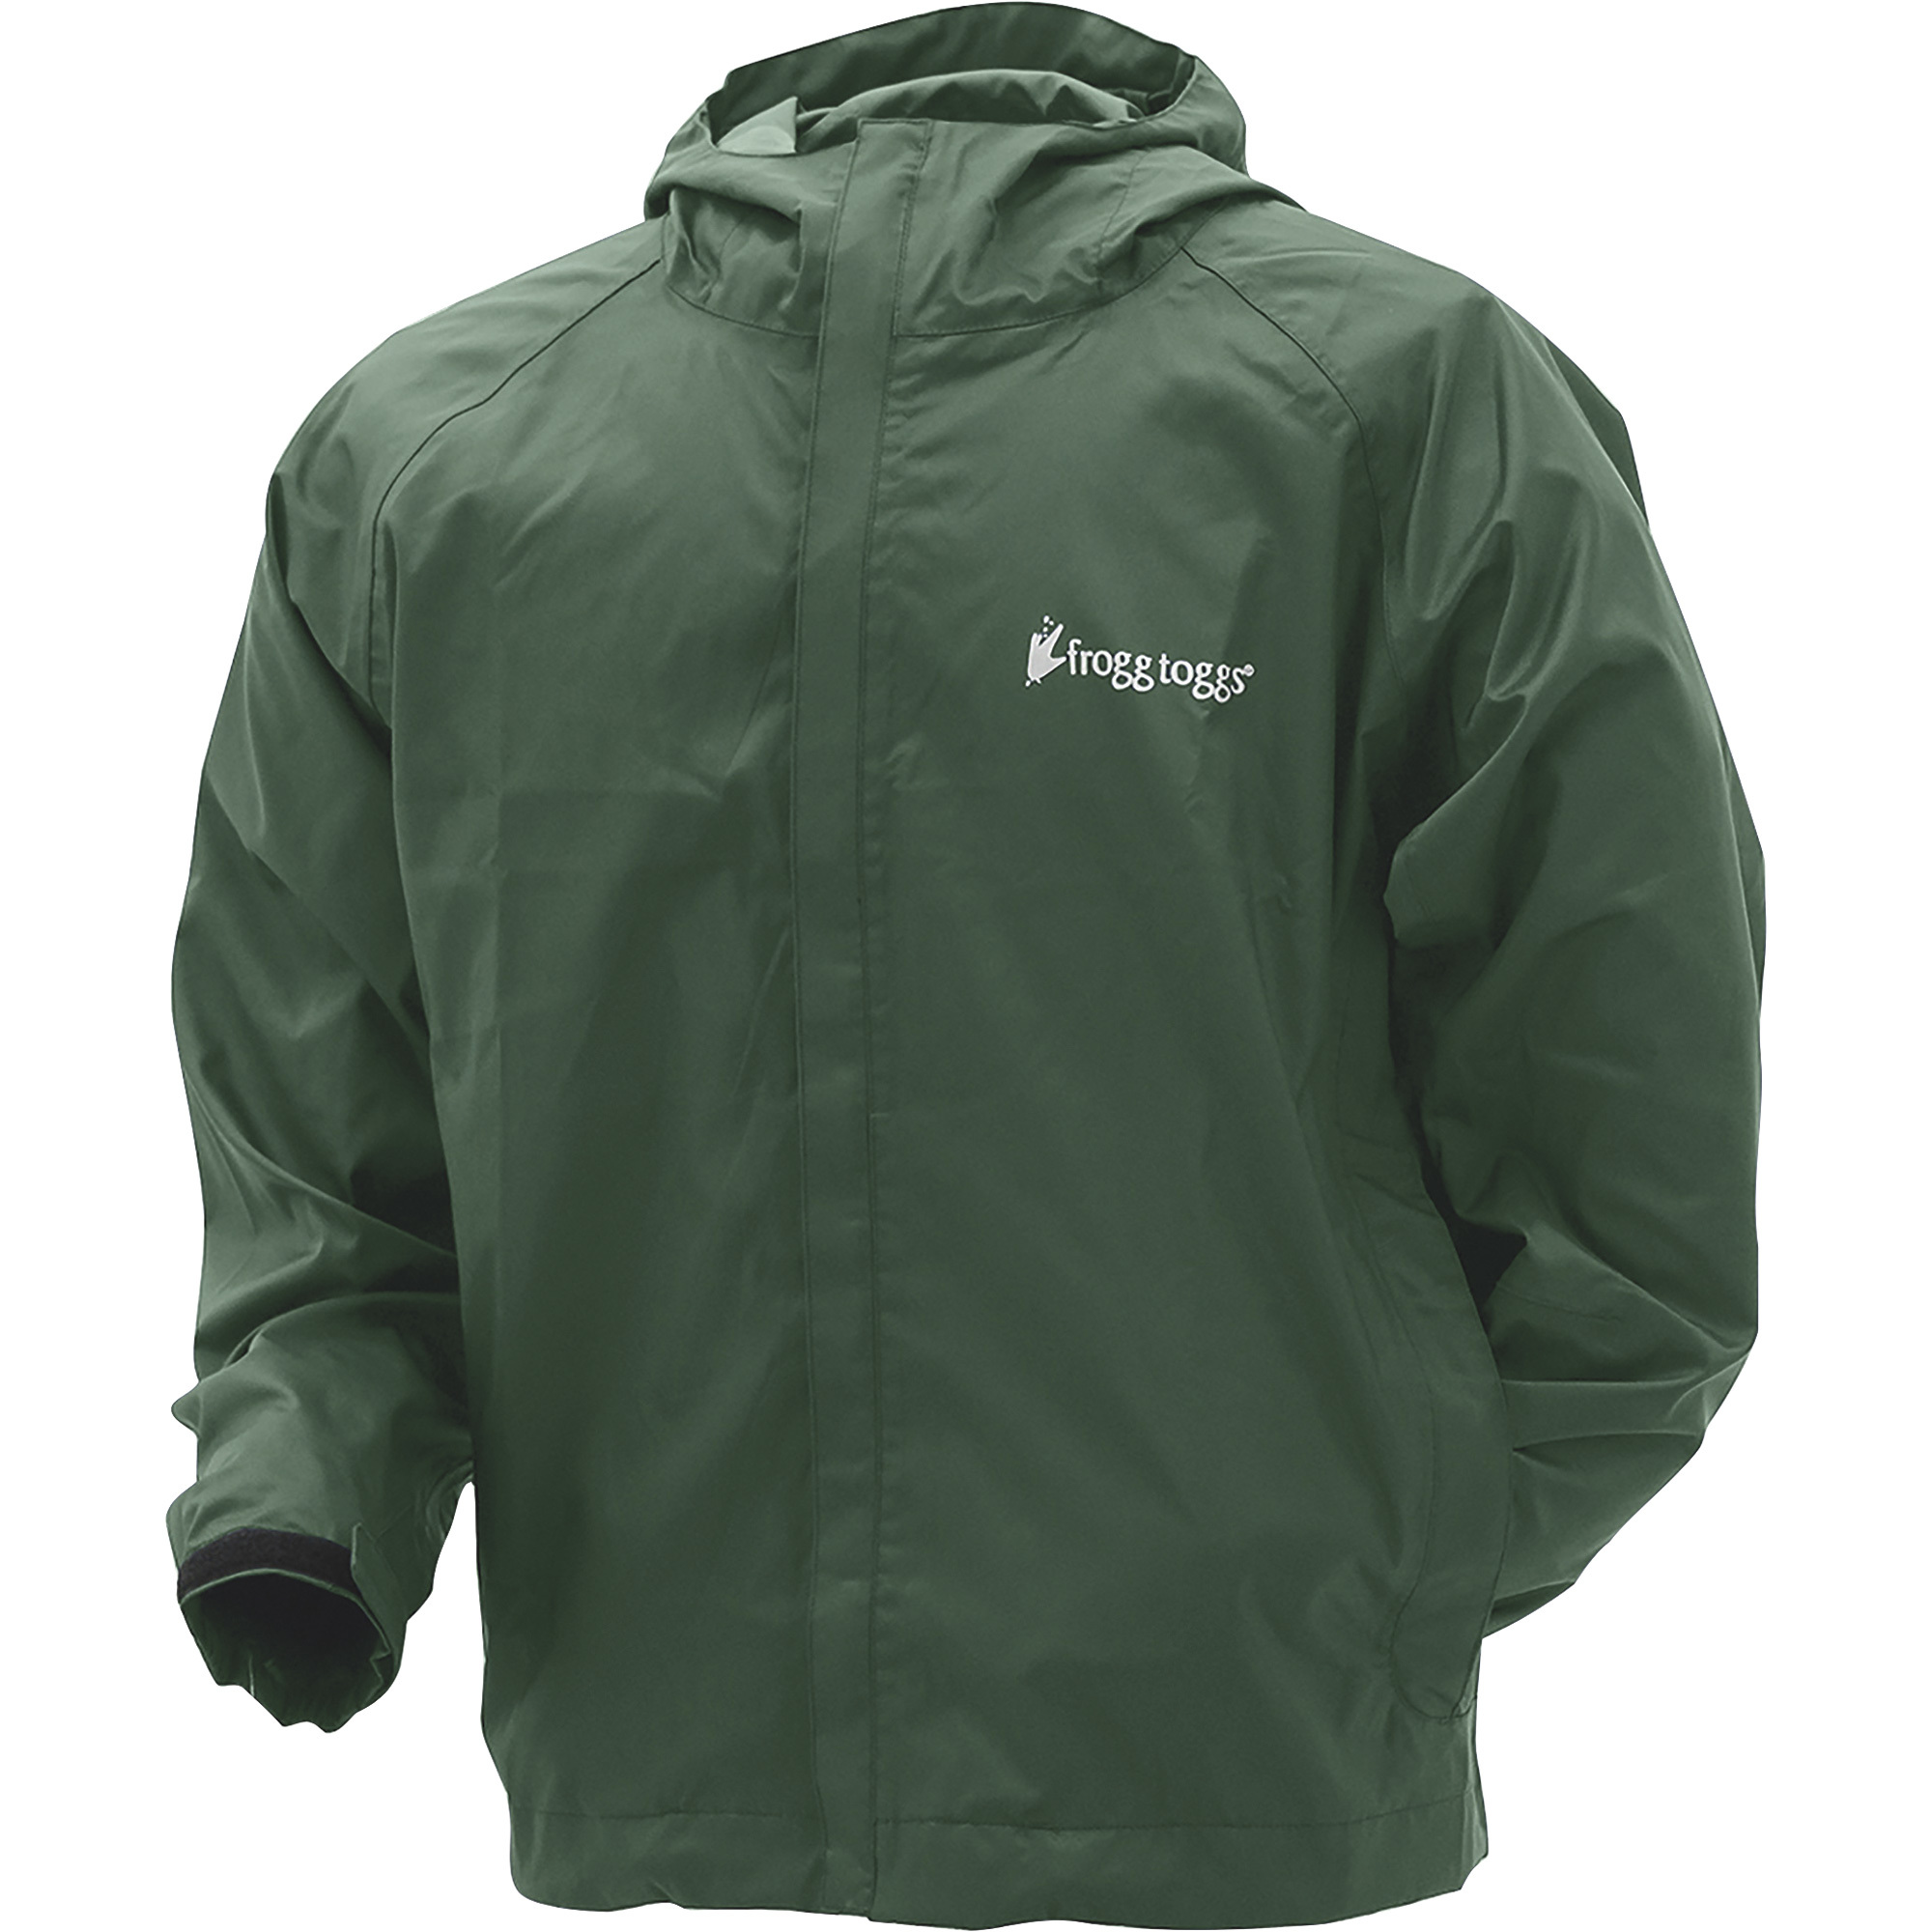 Frogg Toggs Men's Stormwatch Rain Jacket â Green, 2X-Large, Model SW62123-092X